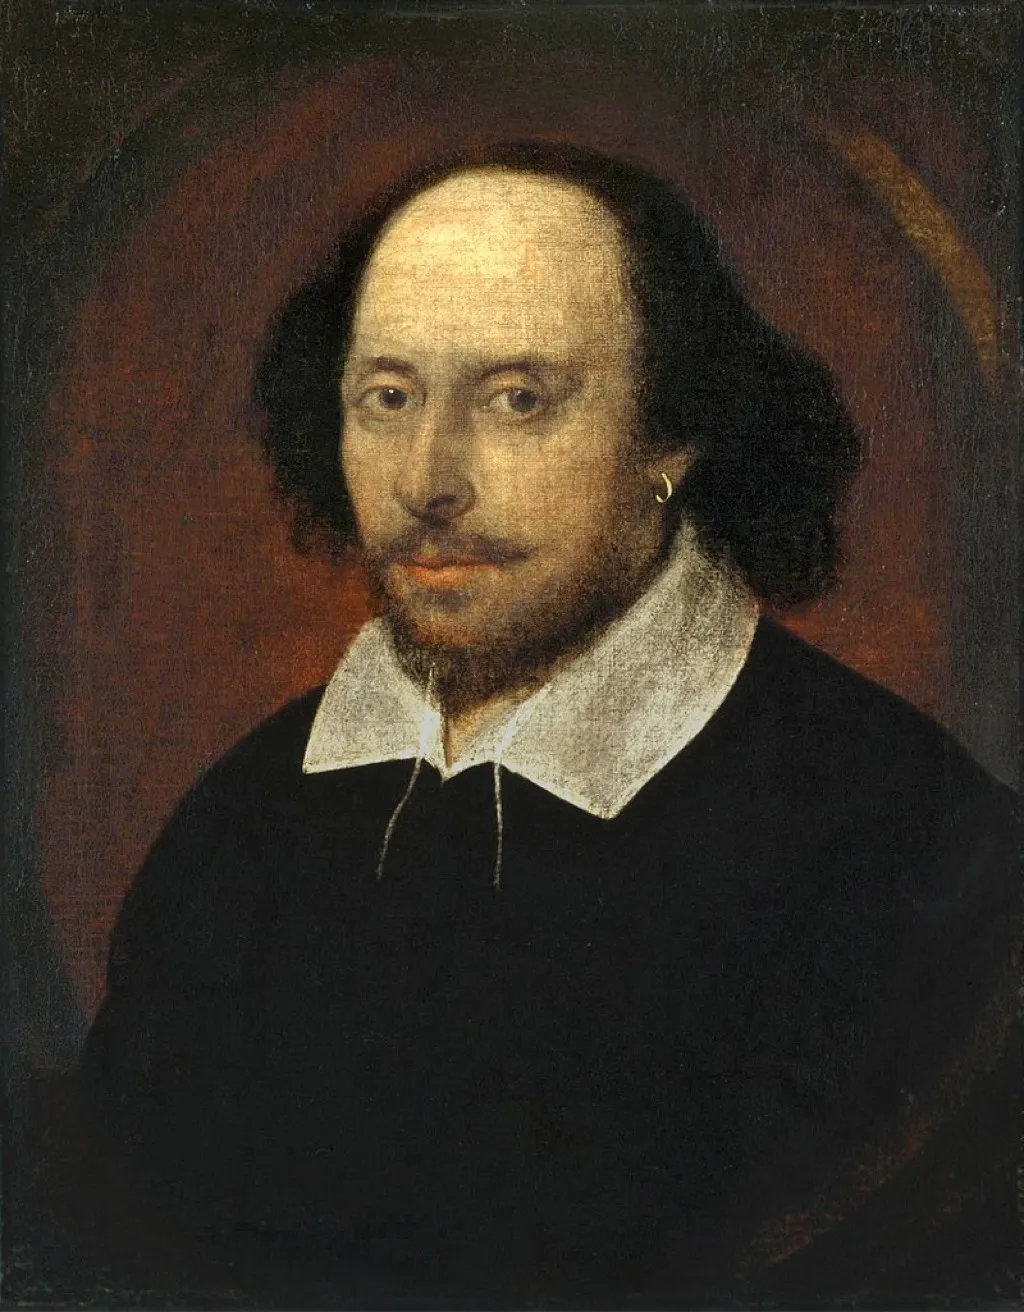 Shakespear portrait